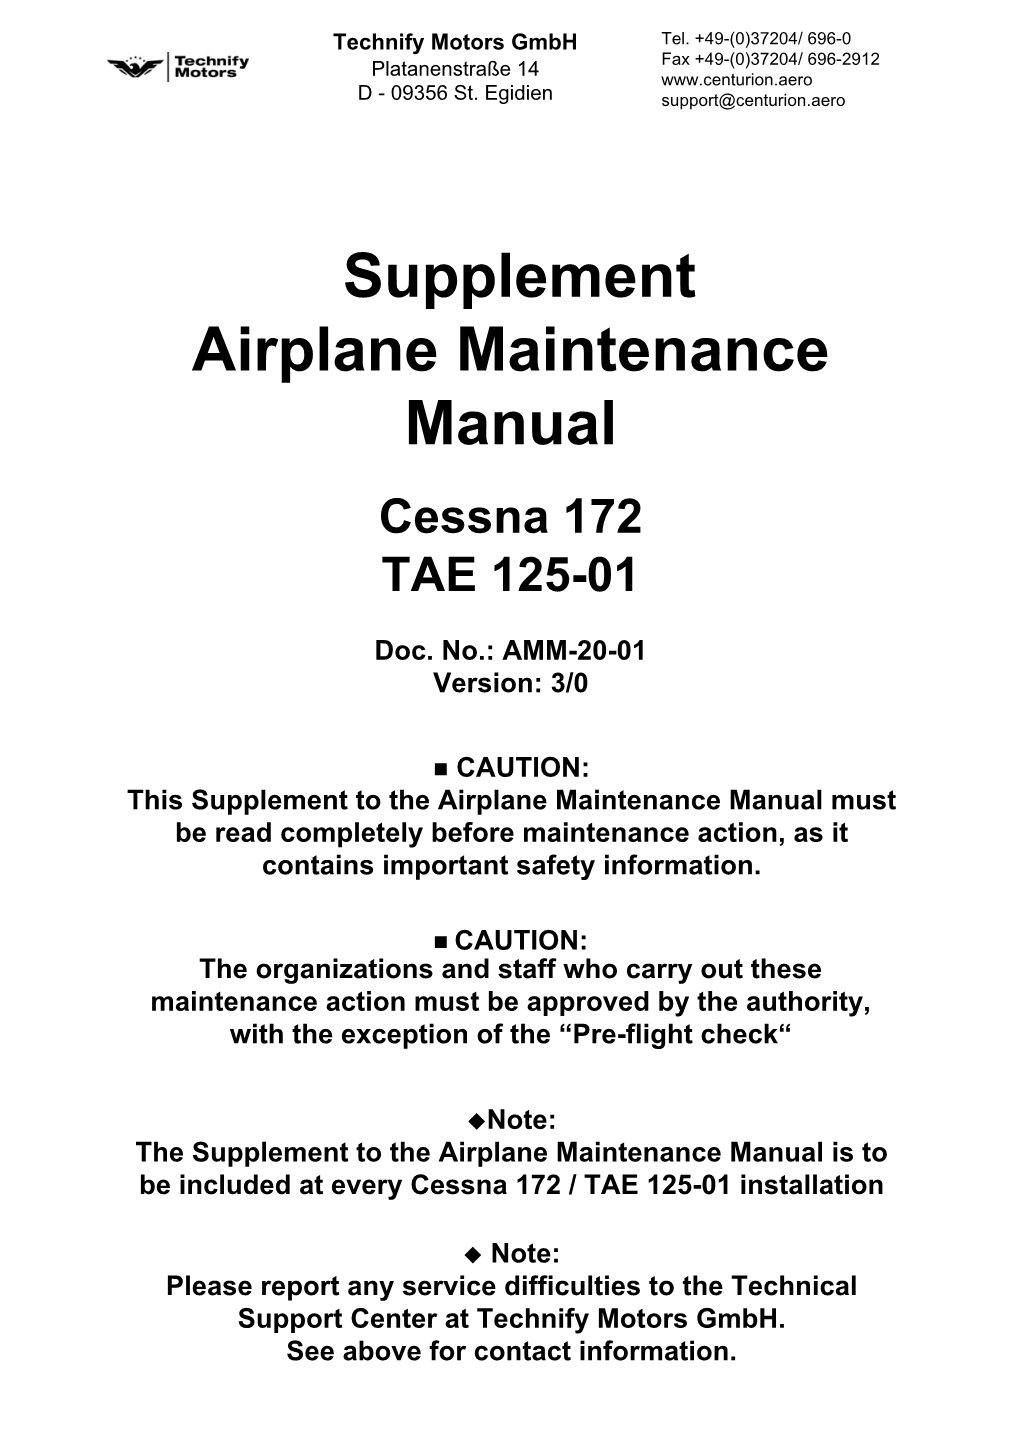 Supplement Airplane Maintenance Manual Cessna 172 TAE 125-01